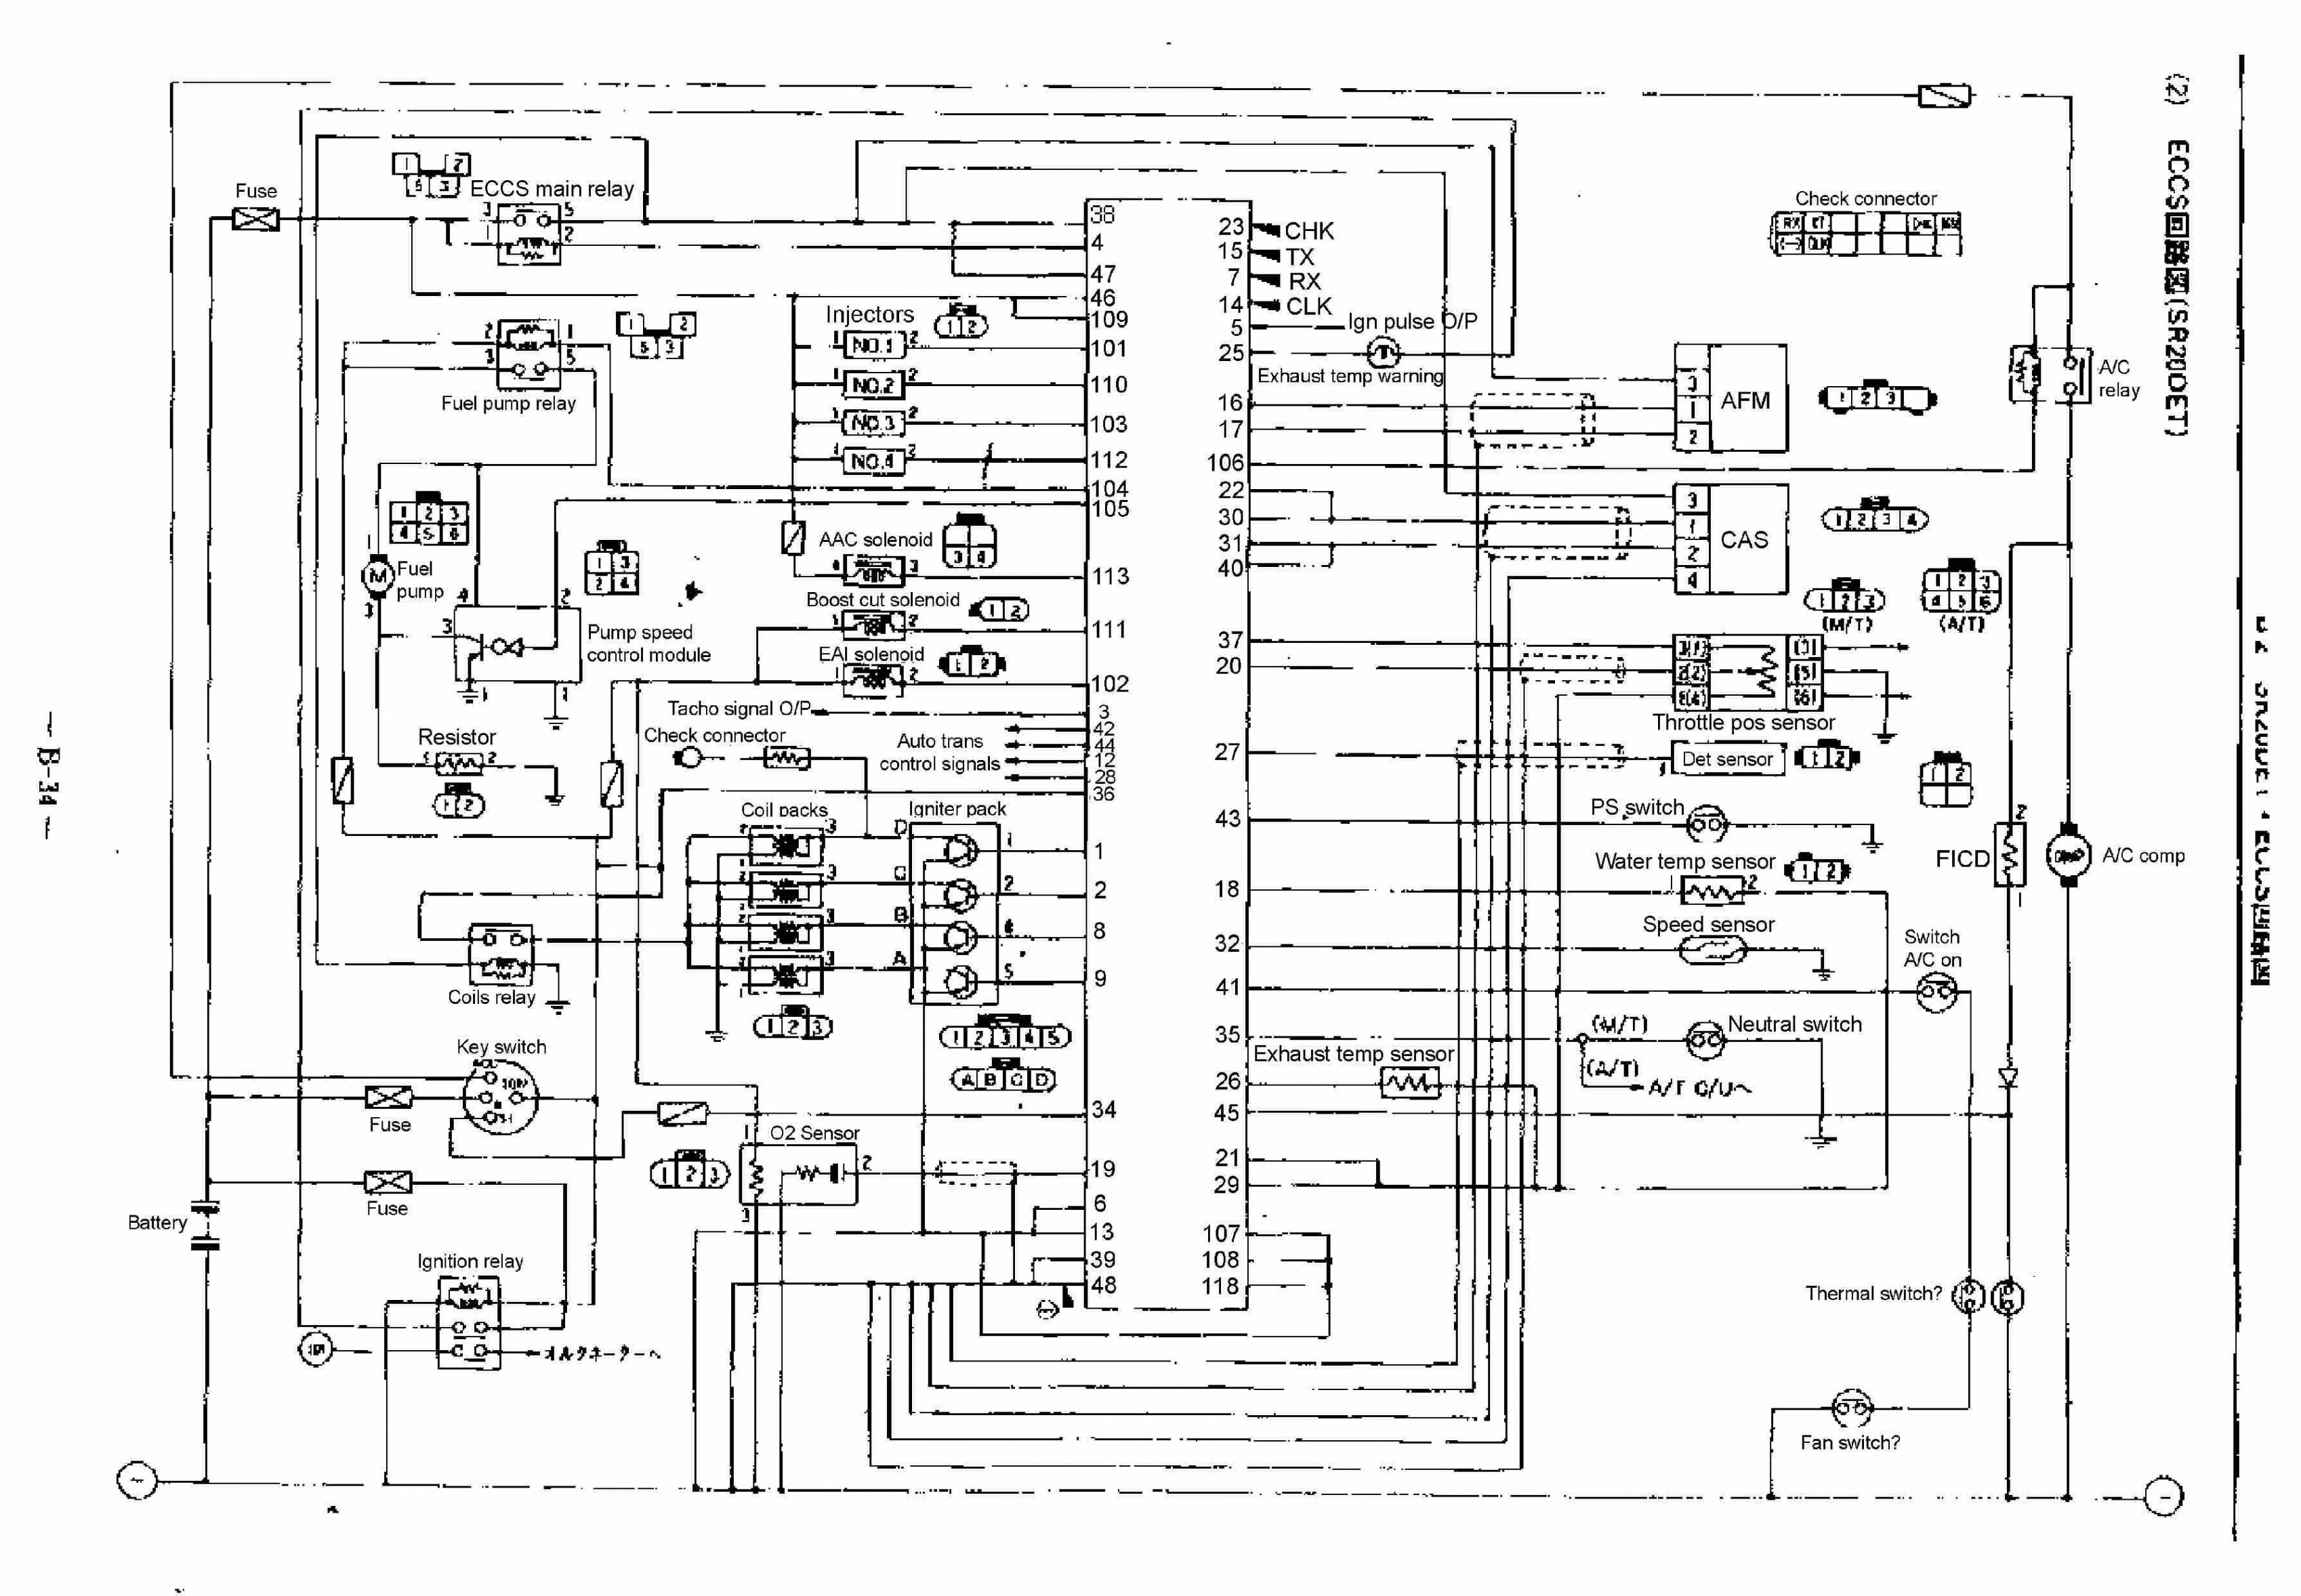 Mercedes Benz Engine Diagram Mercedes Benz Parts Diagram – Diagram Car Best Car Parts and Of Mercedes Benz Engine Diagram